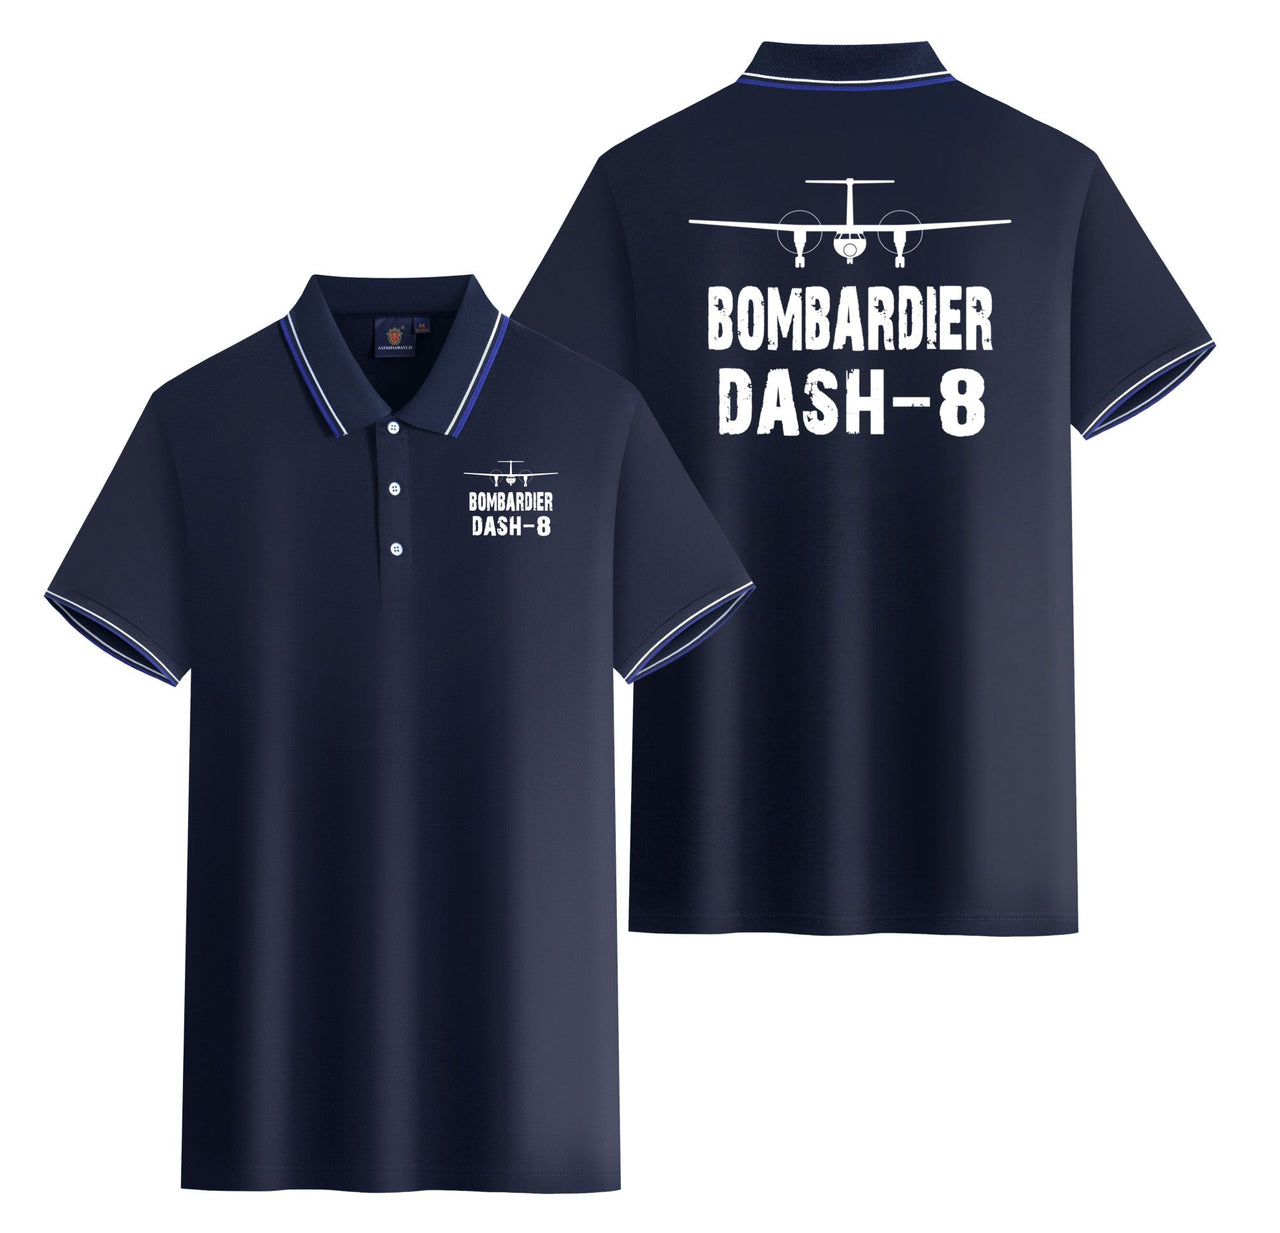 Bombardier Dash-8 & Plane Designed Stylish Polo T-Shirts (Double-Side)